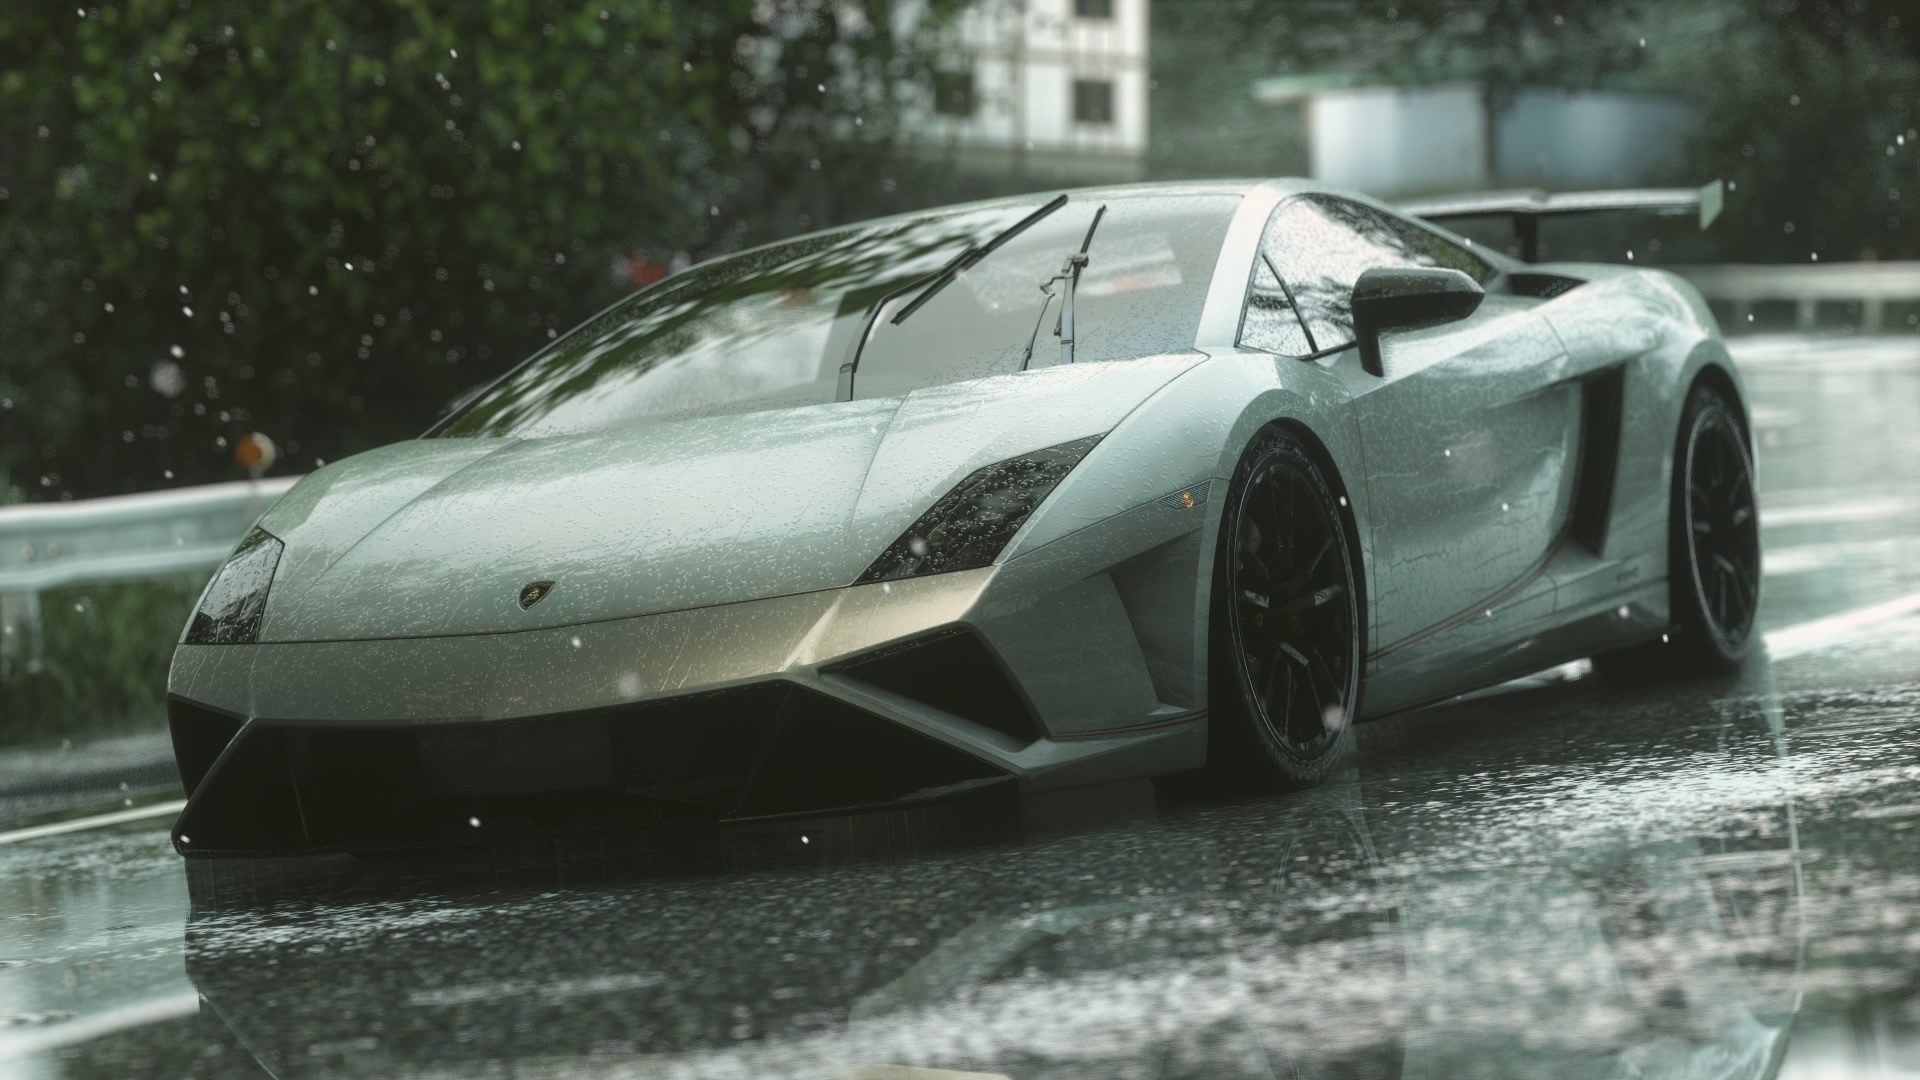 General 1920x1080 Driveclub Lamborghini car supercars wet wet road asphalt video games vehicle screen shot